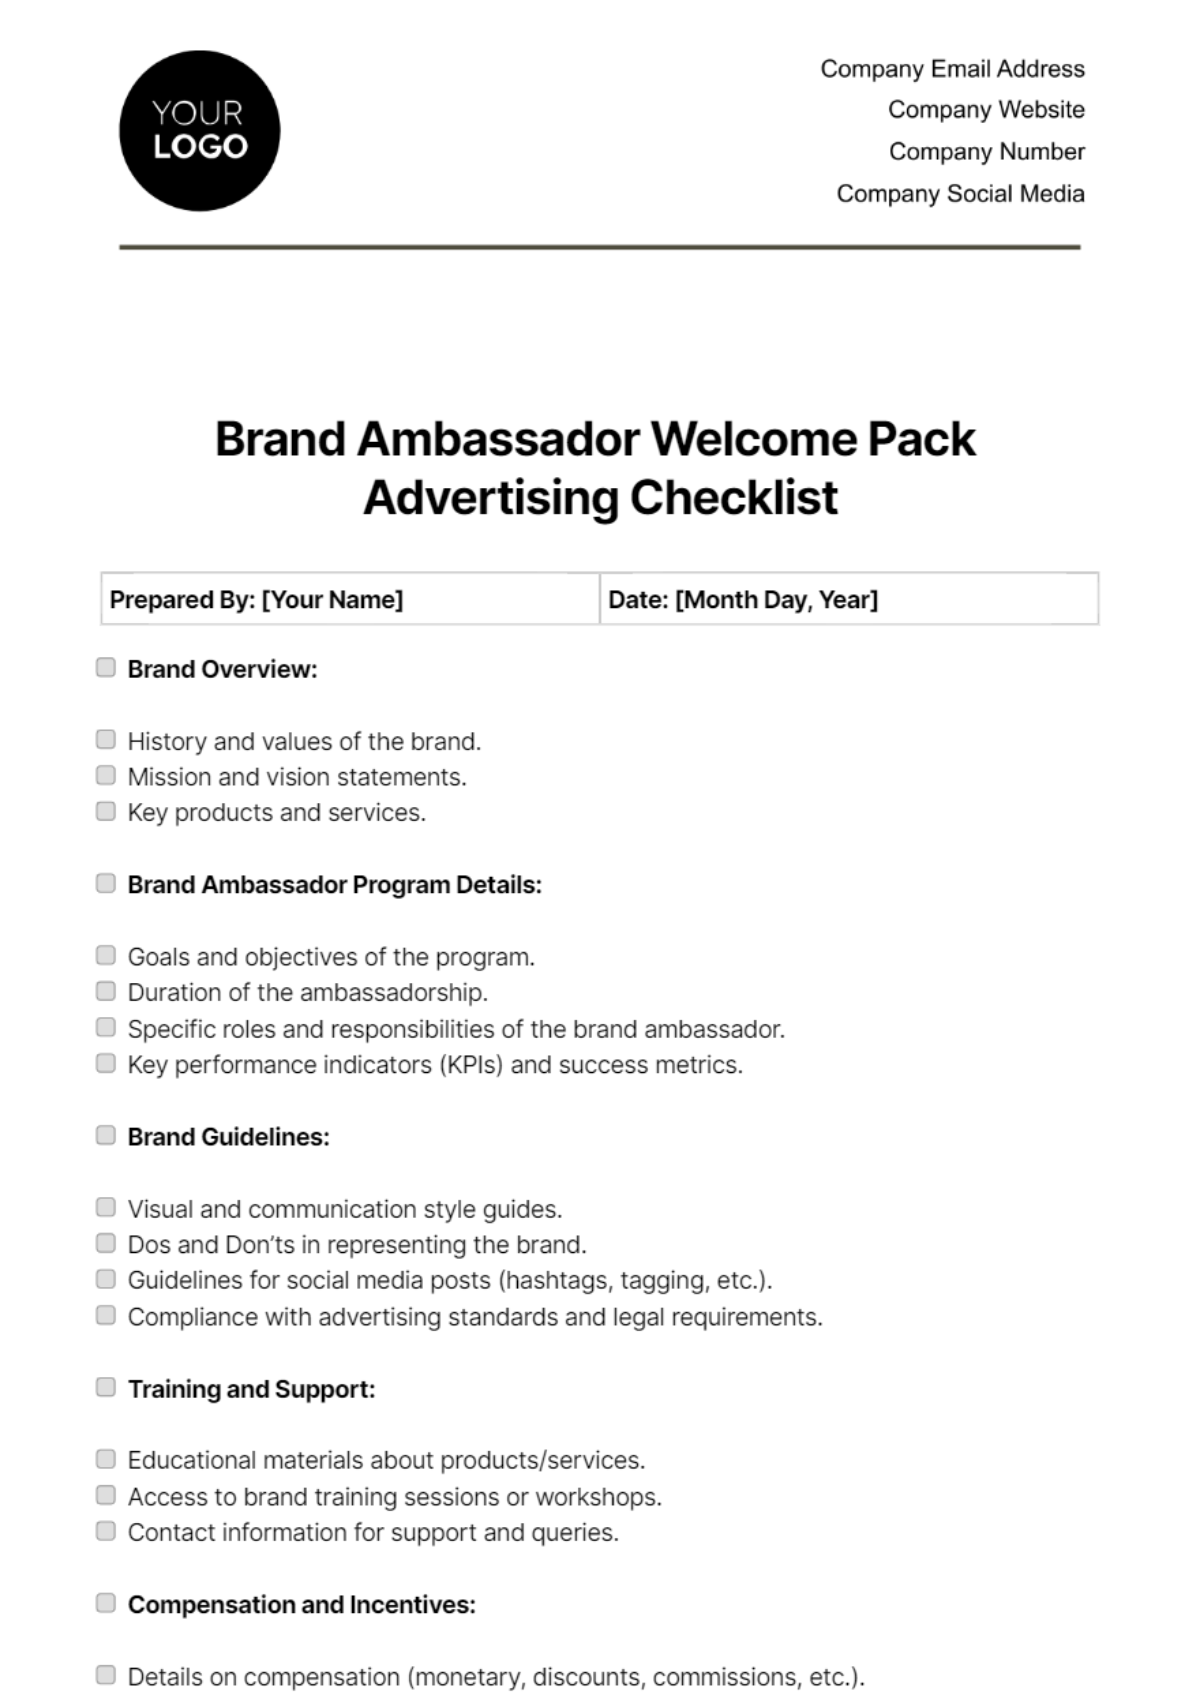 Brand Ambassador Welcome Pack Advertising Checklist Template